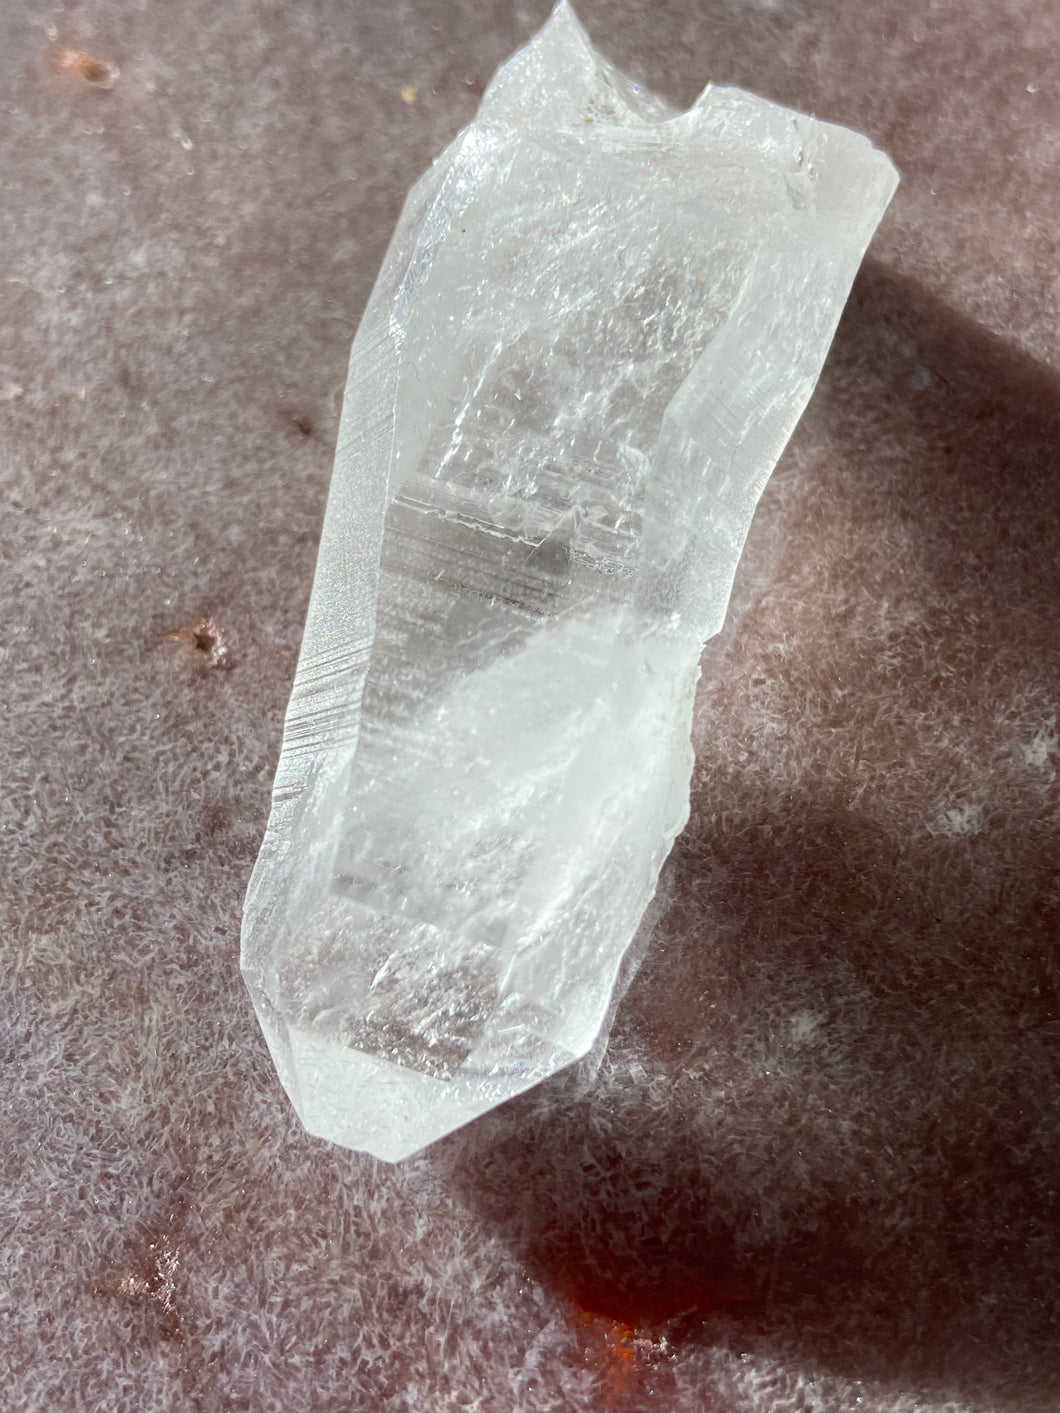 Lemurian crystal 30